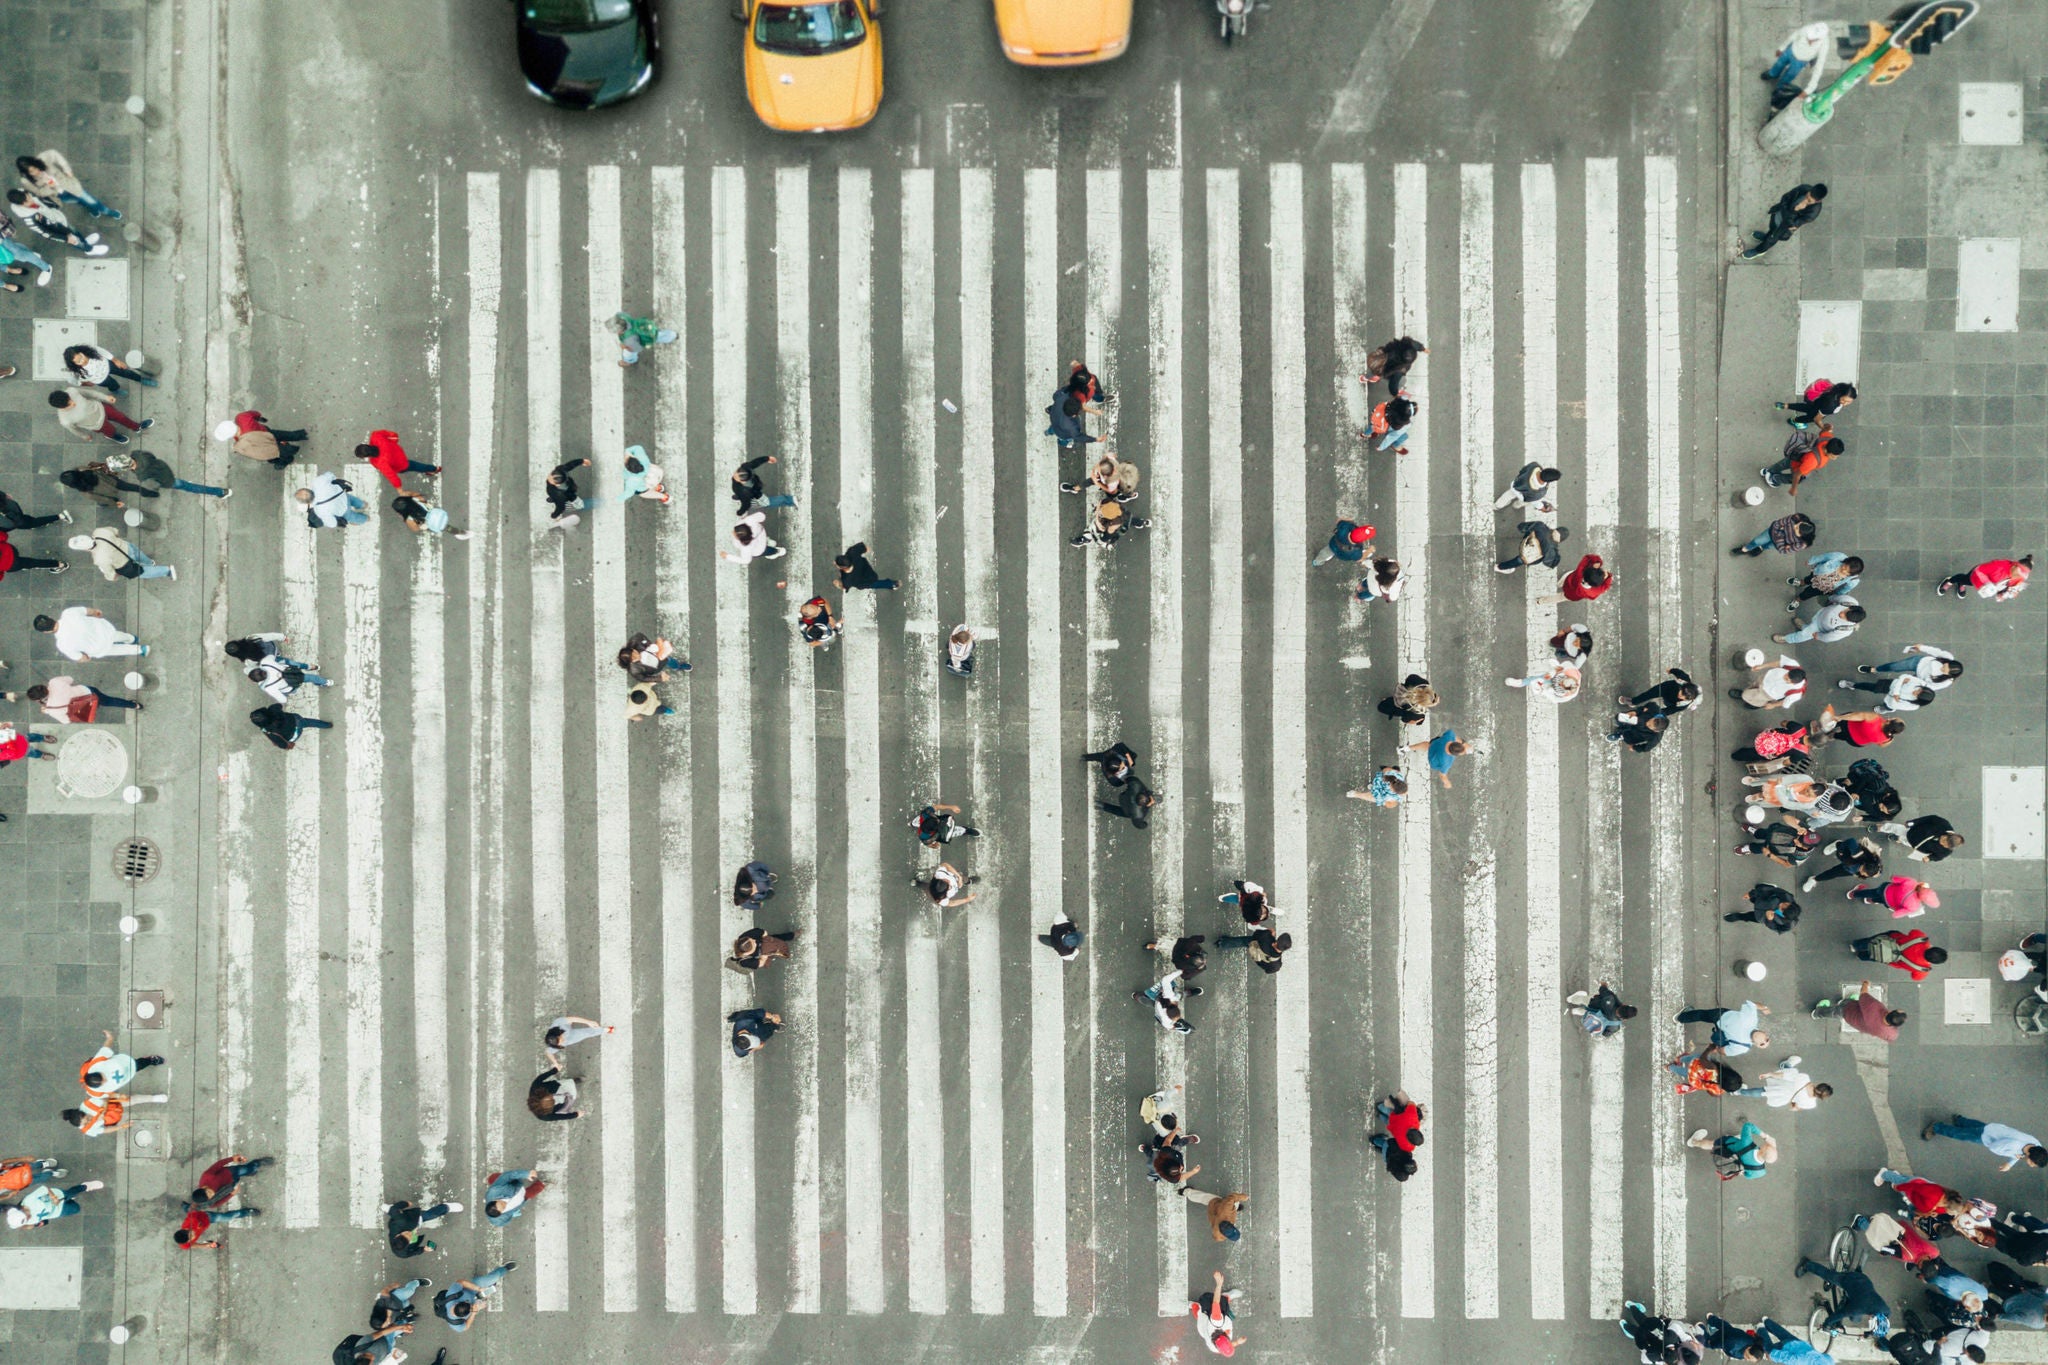 Pedestrians on zebra crossing, New York City